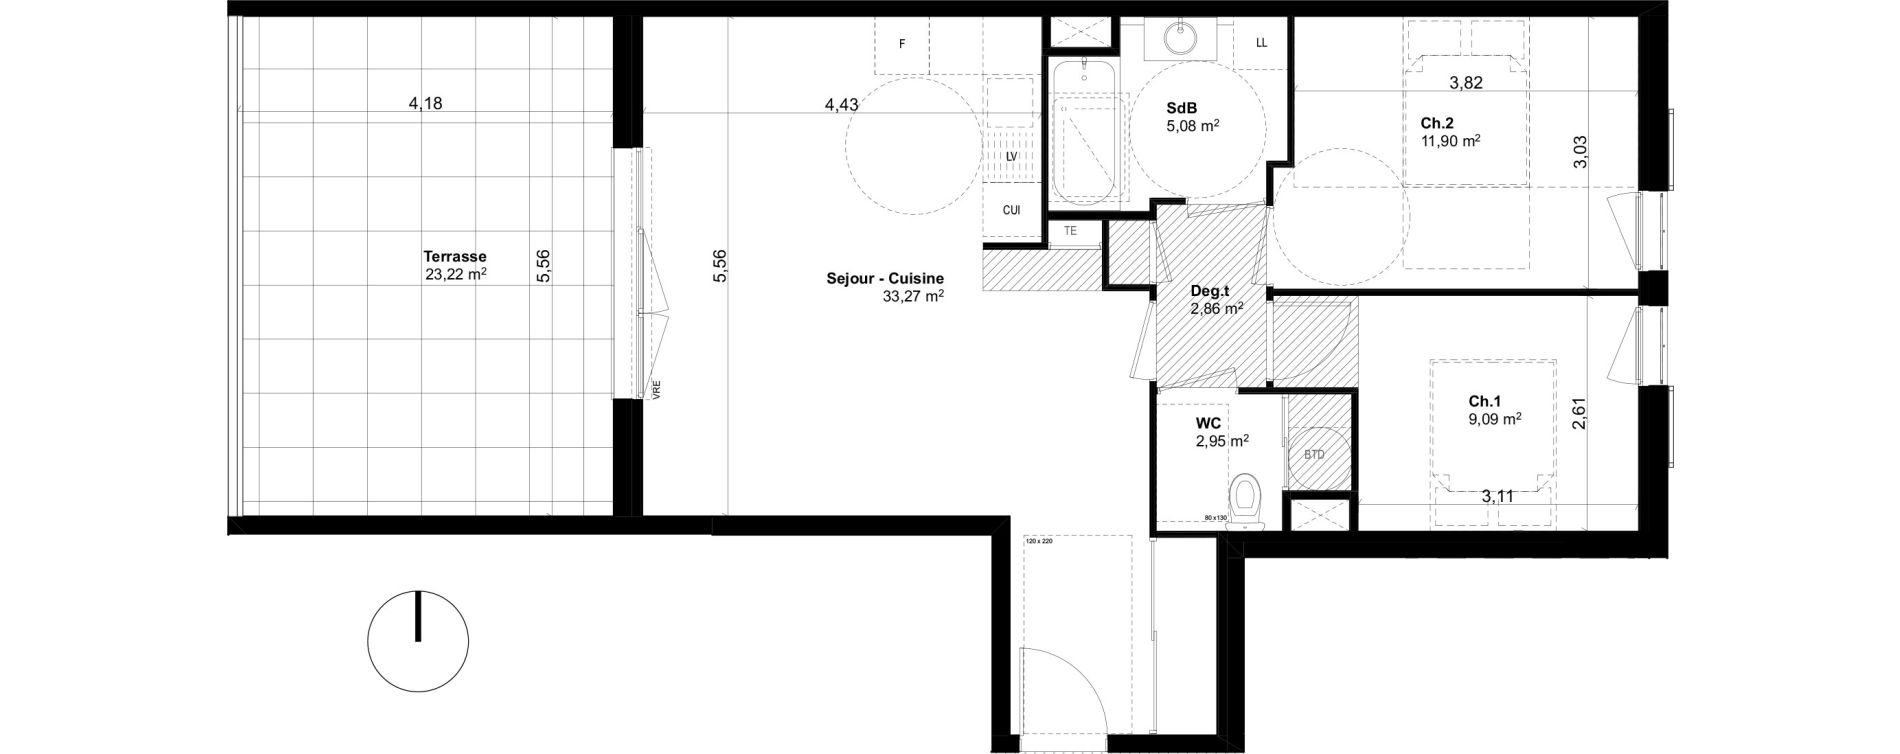 Appartement T3 de 65,15 m2 &agrave; Ventabren L heritiere